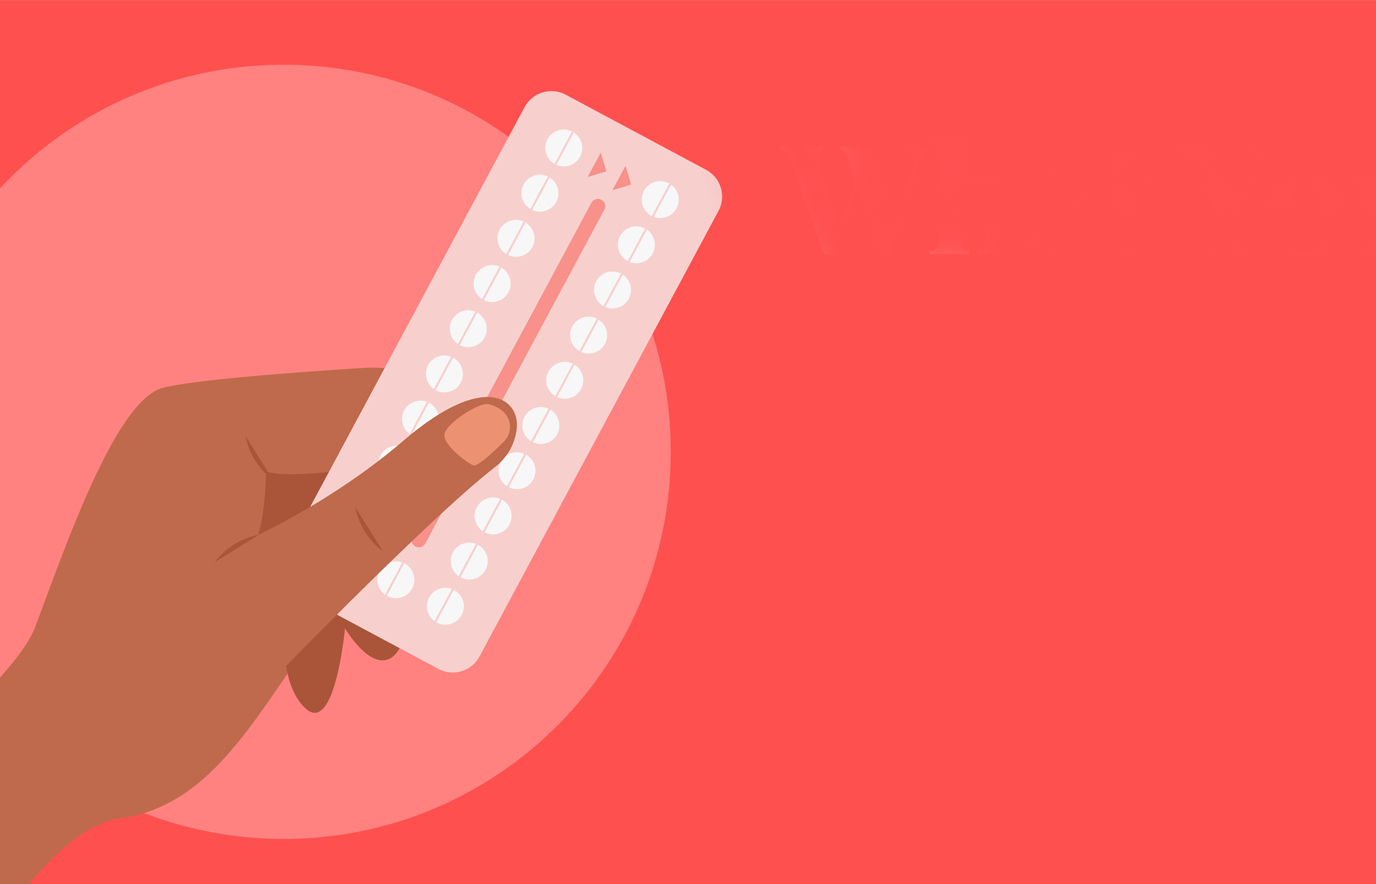 hand holding birth control mini-pill pack